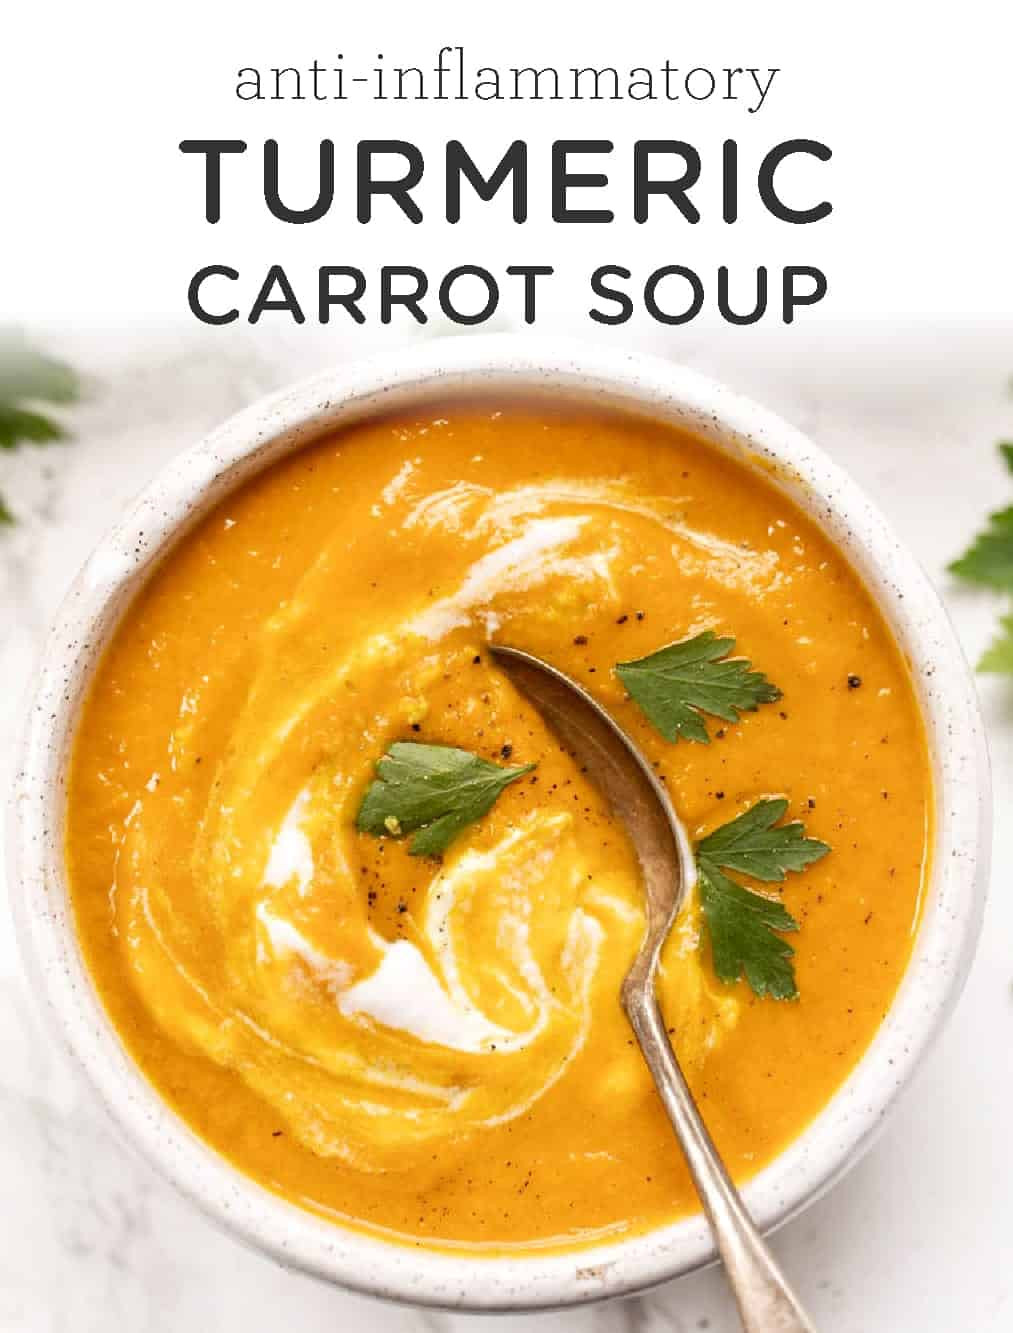 Carrot Soup Recipes
 Ginger & Turmeric Carrot Soup